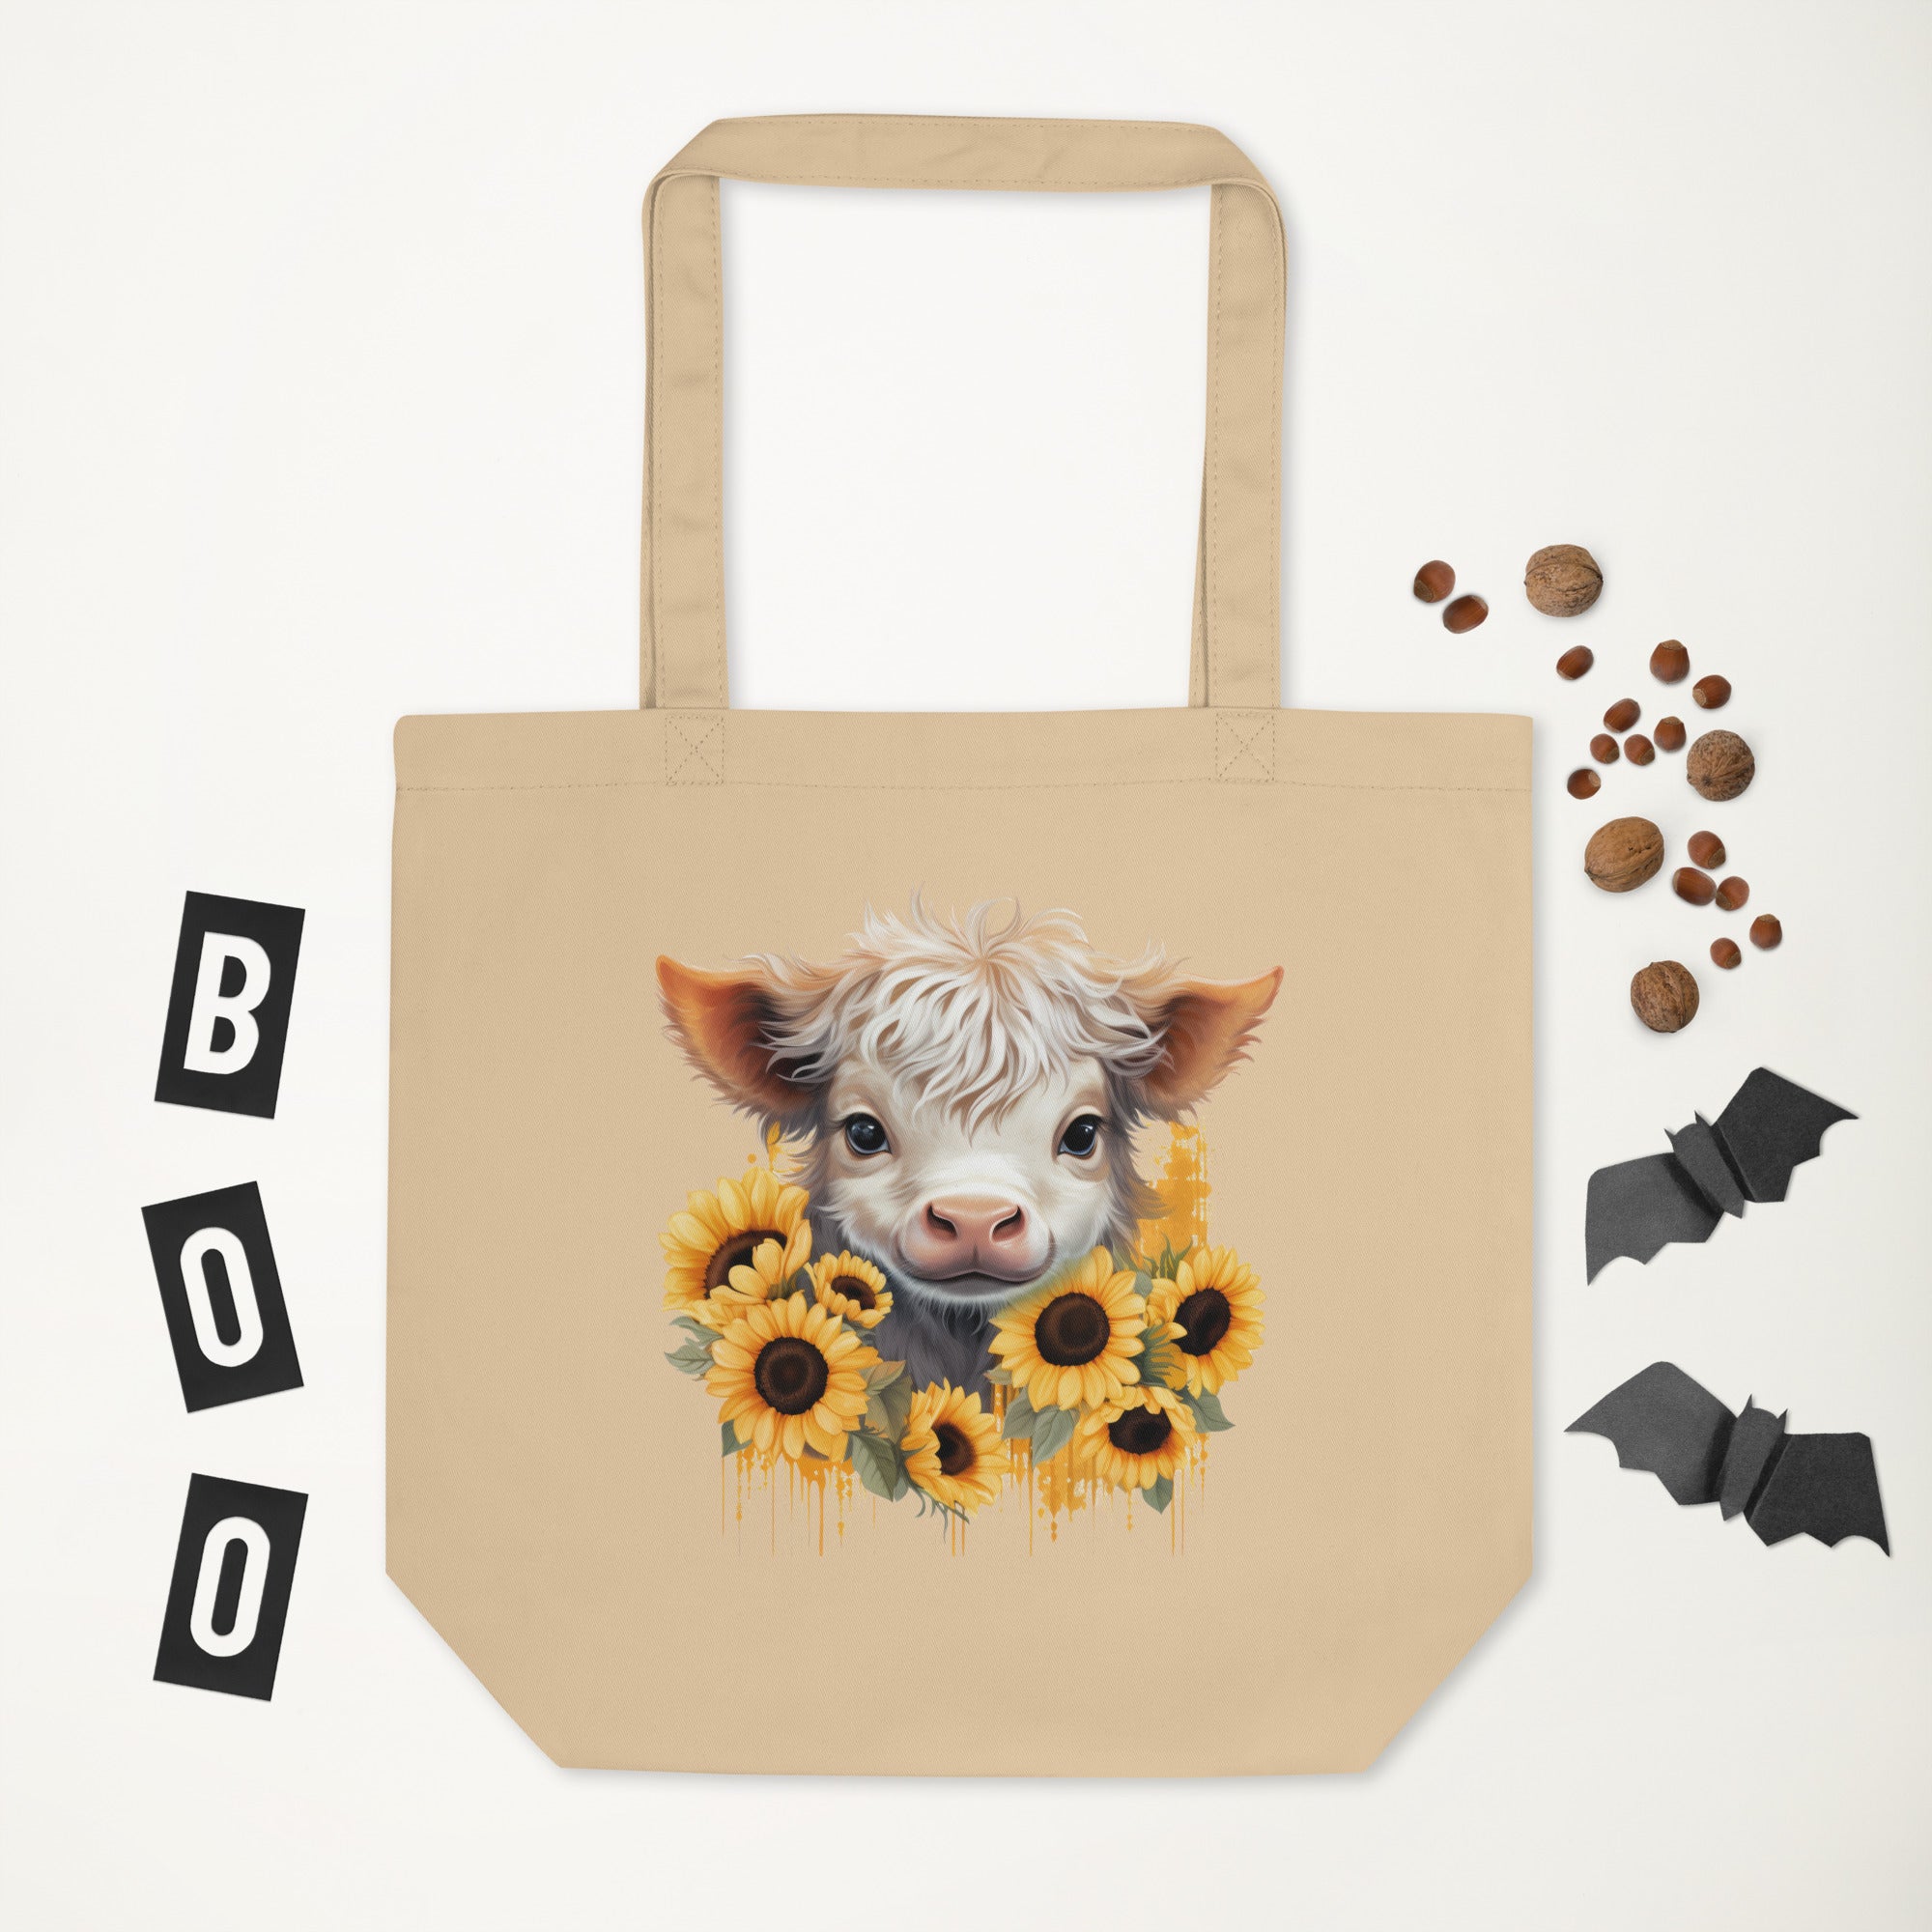 Eco Tote Bag, Traveling, Shopping, Weekend, Gift Idea, Organic Bag, School